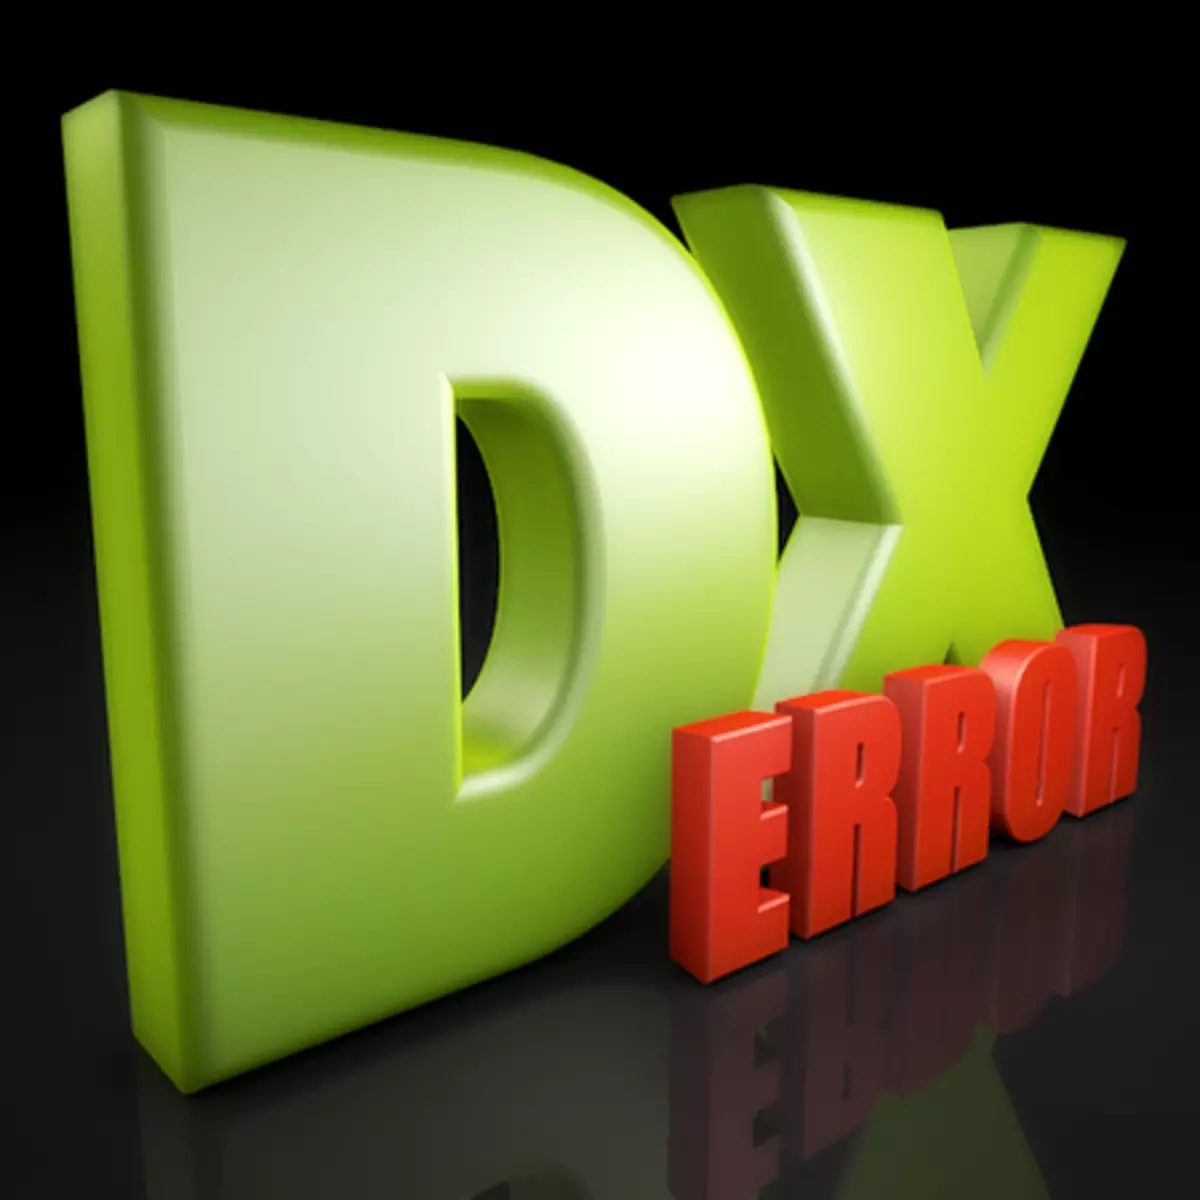 DirectX-Agorda Eraro pri interna eraro okazis